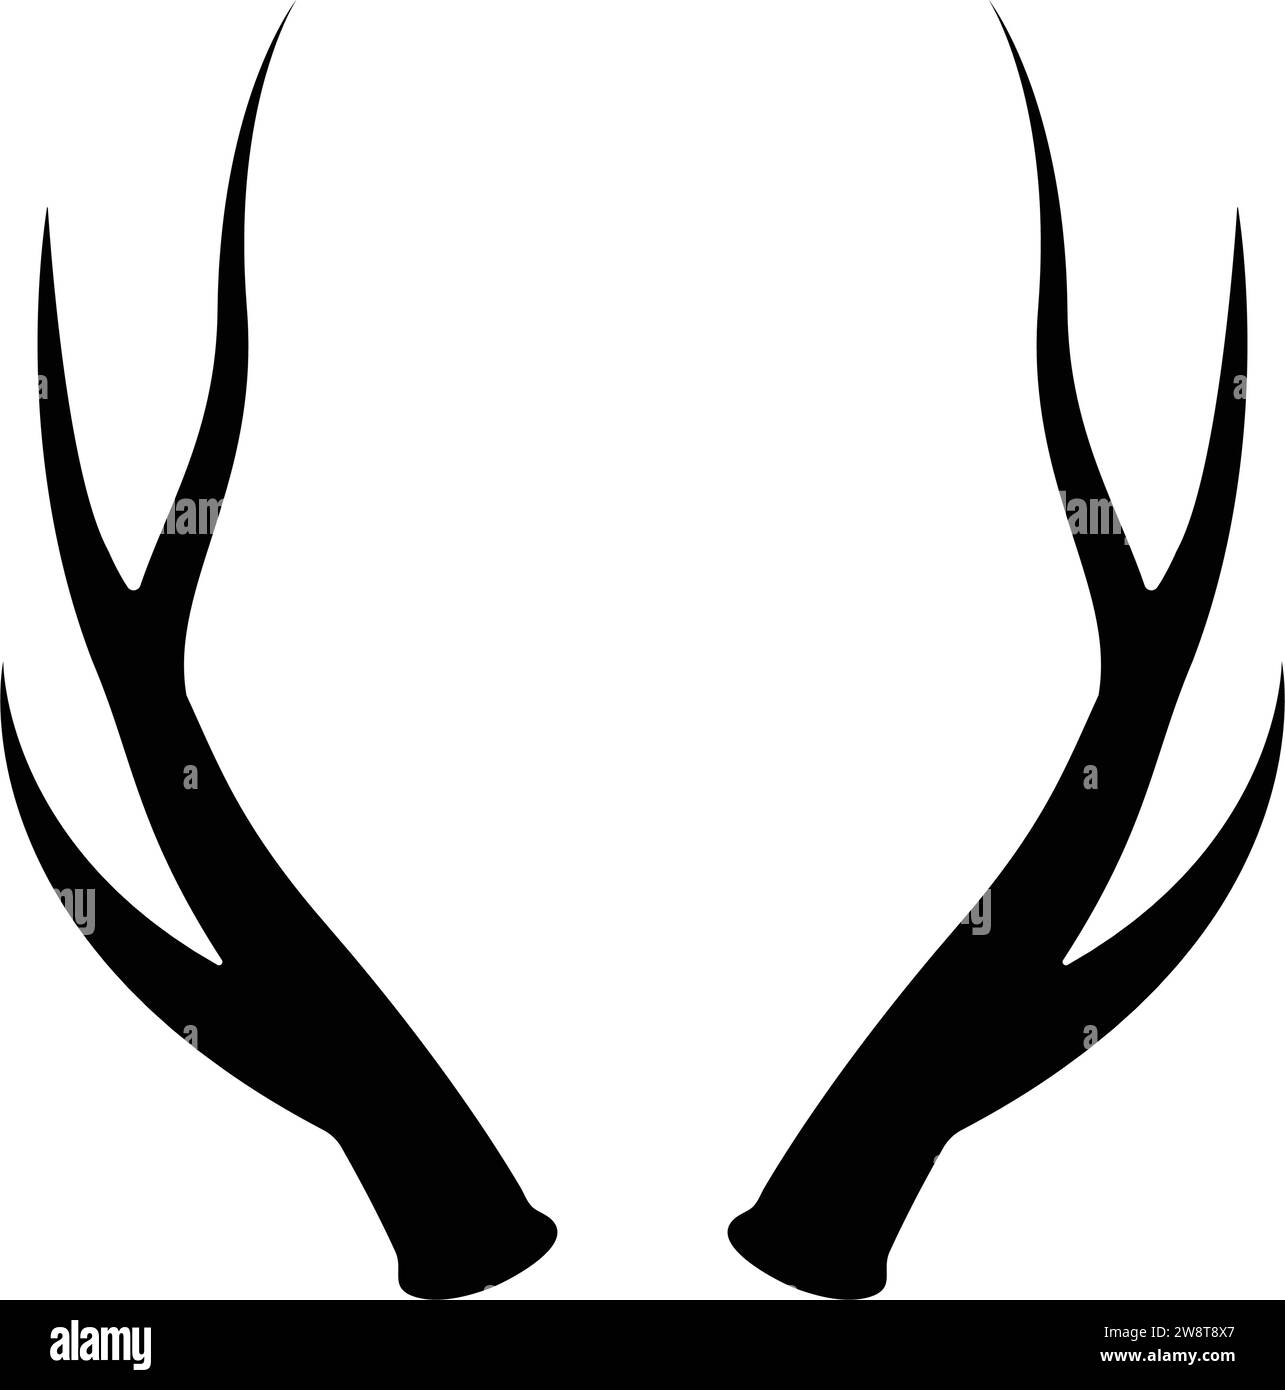 deer antler icon vector illustration design Stock Vector